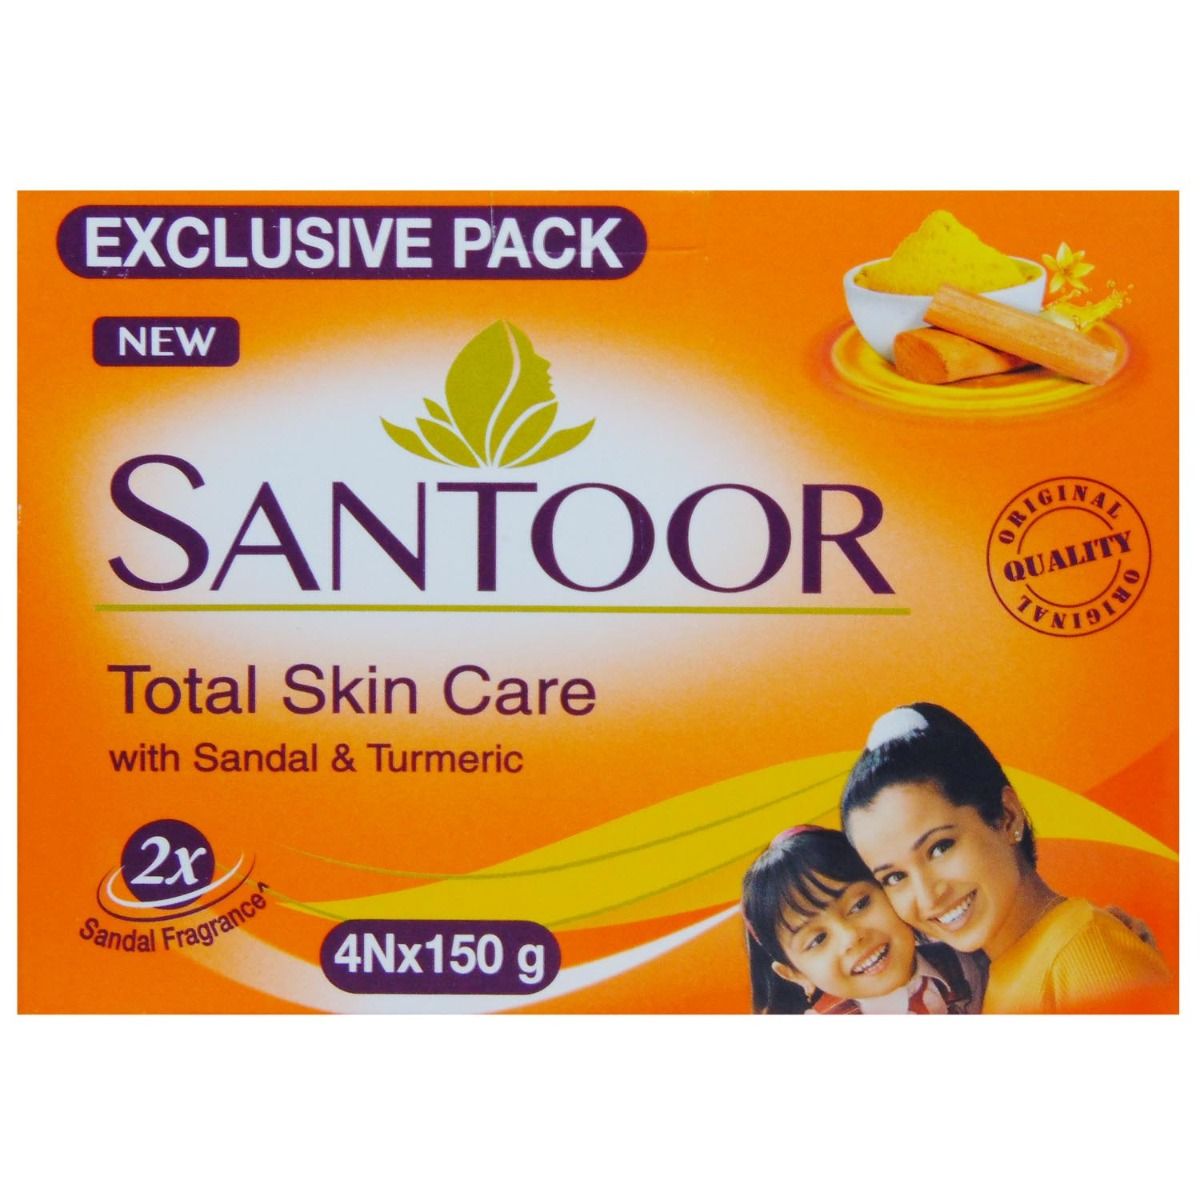 Santoor Sandal Soap, 600 gm (4 x 150 gm), Pack of 1 